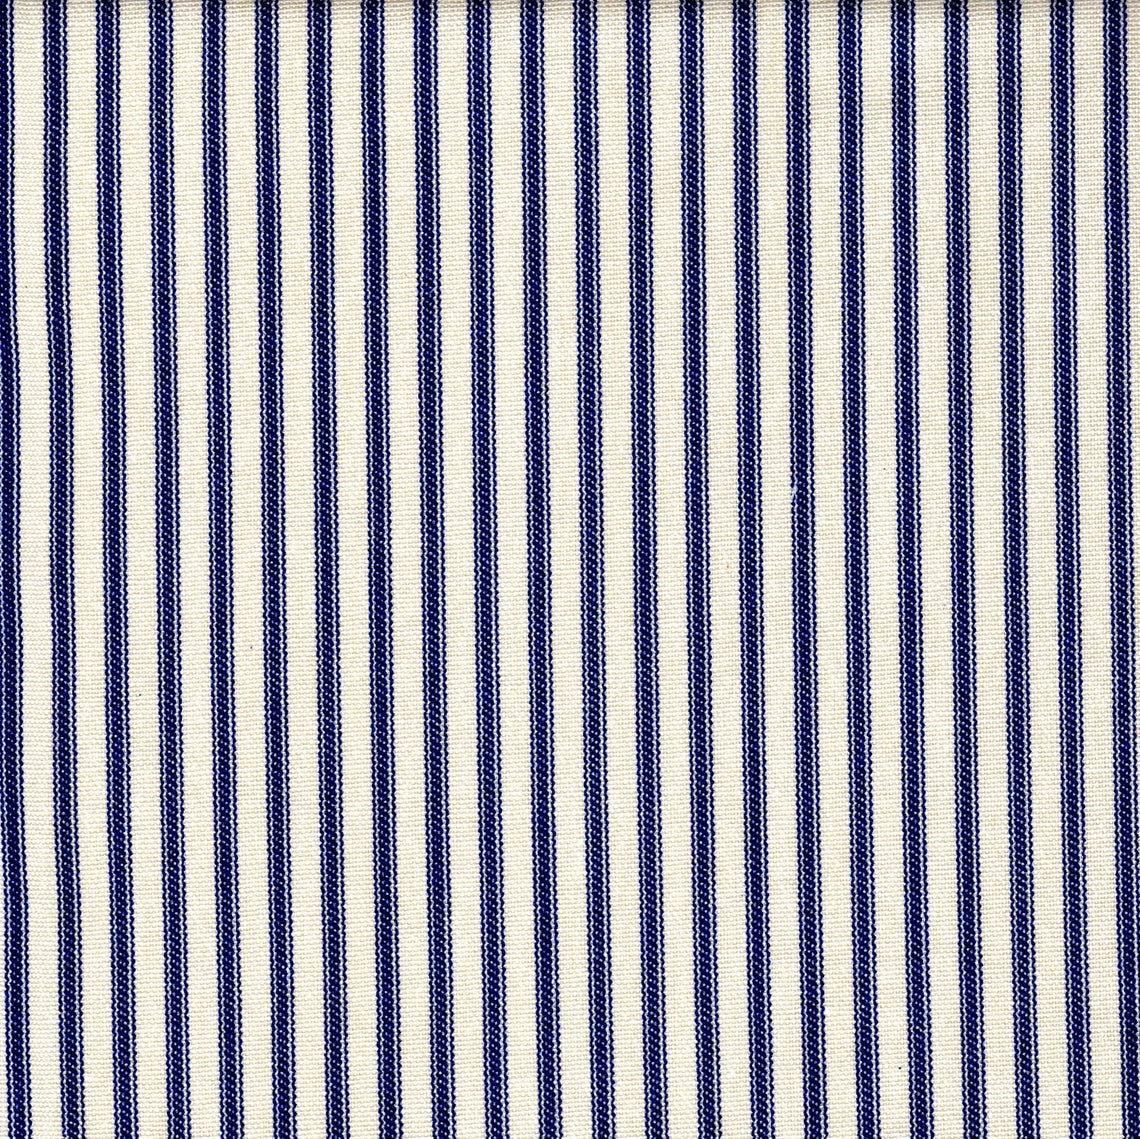 tailored tier cafe curtain panels pair in farmhouse dark blue ticking stripe on cream